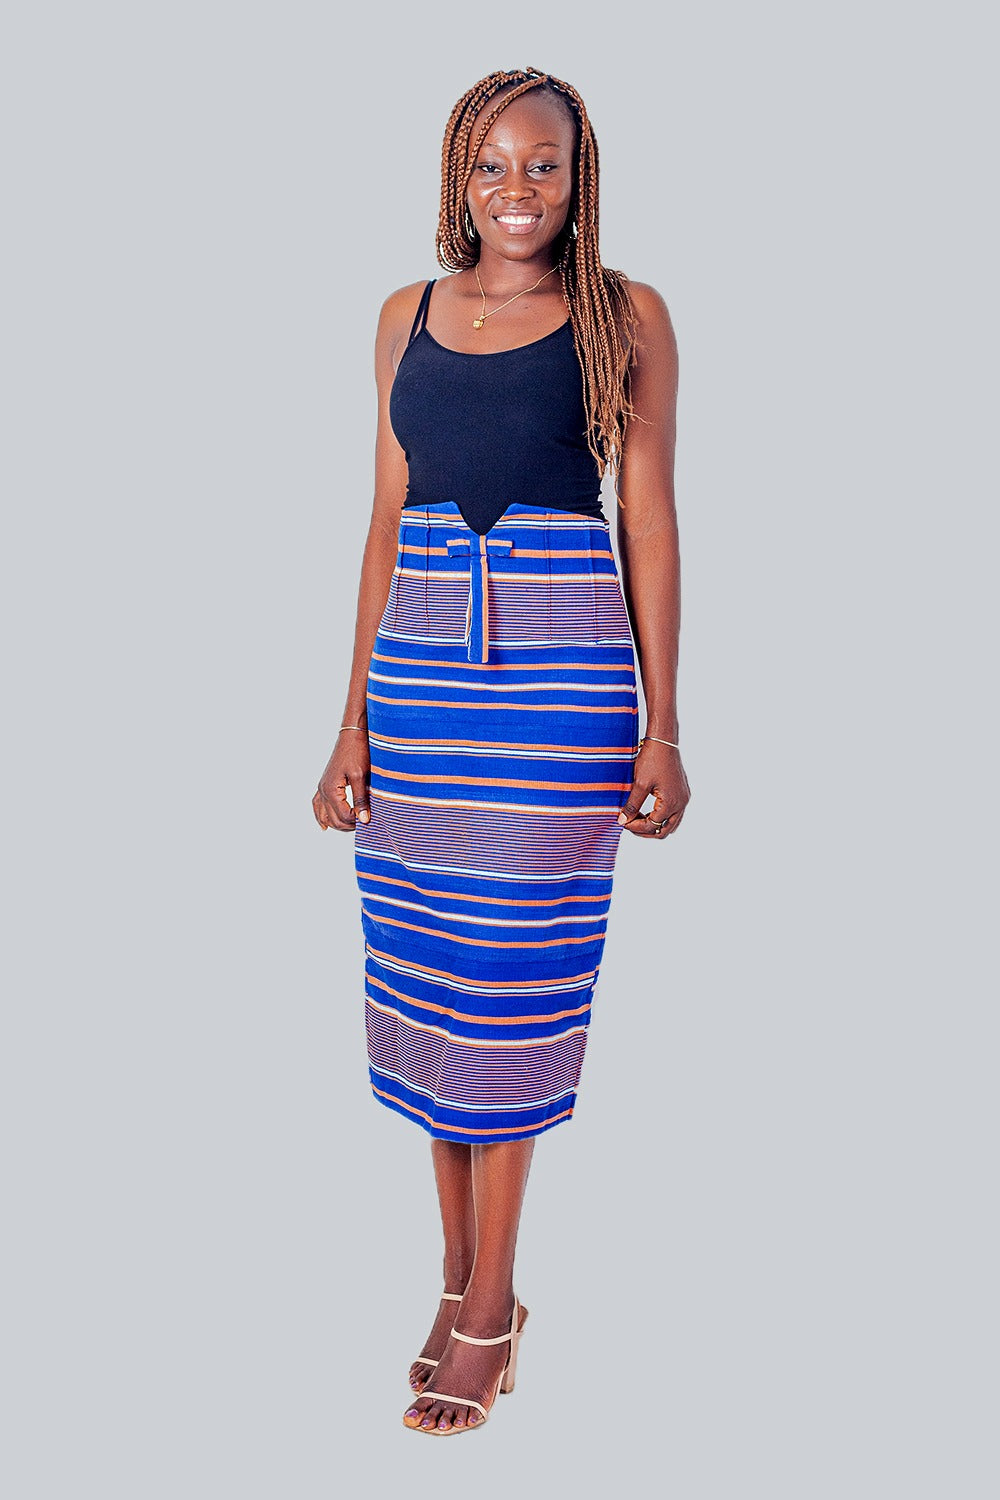 Chloe African Prints Midi Skirt